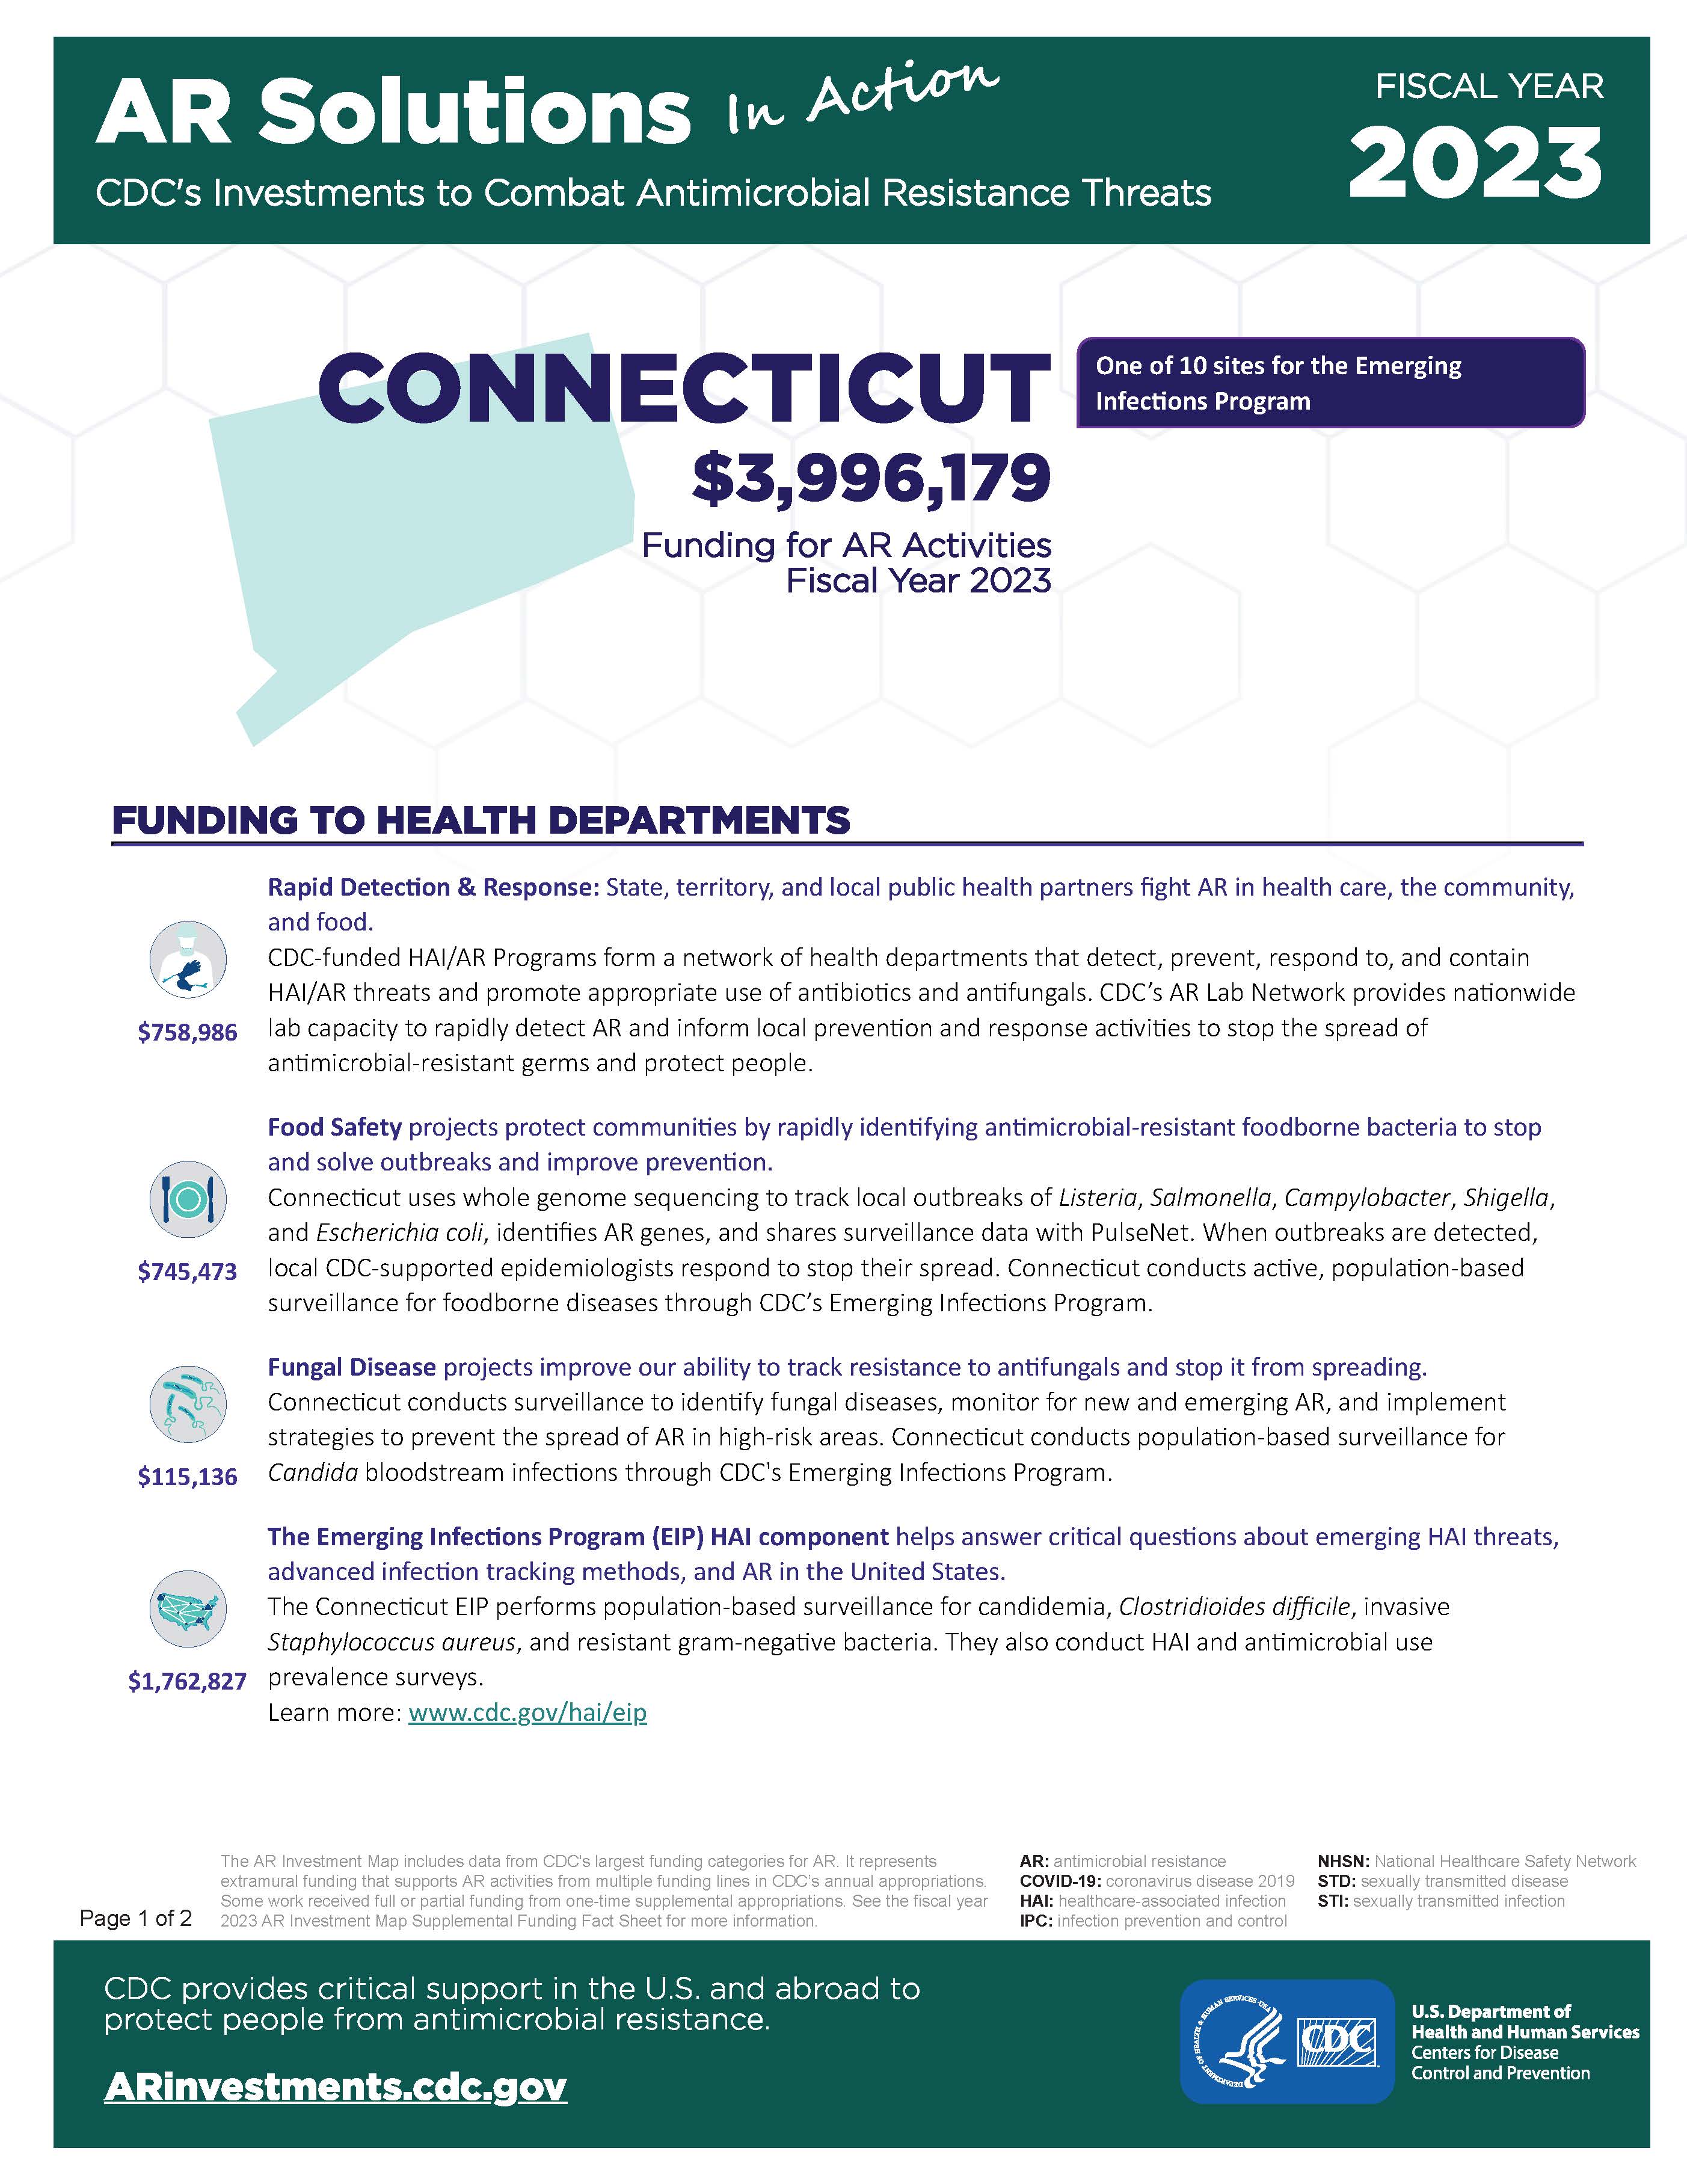 View Factsheet for Connecticut